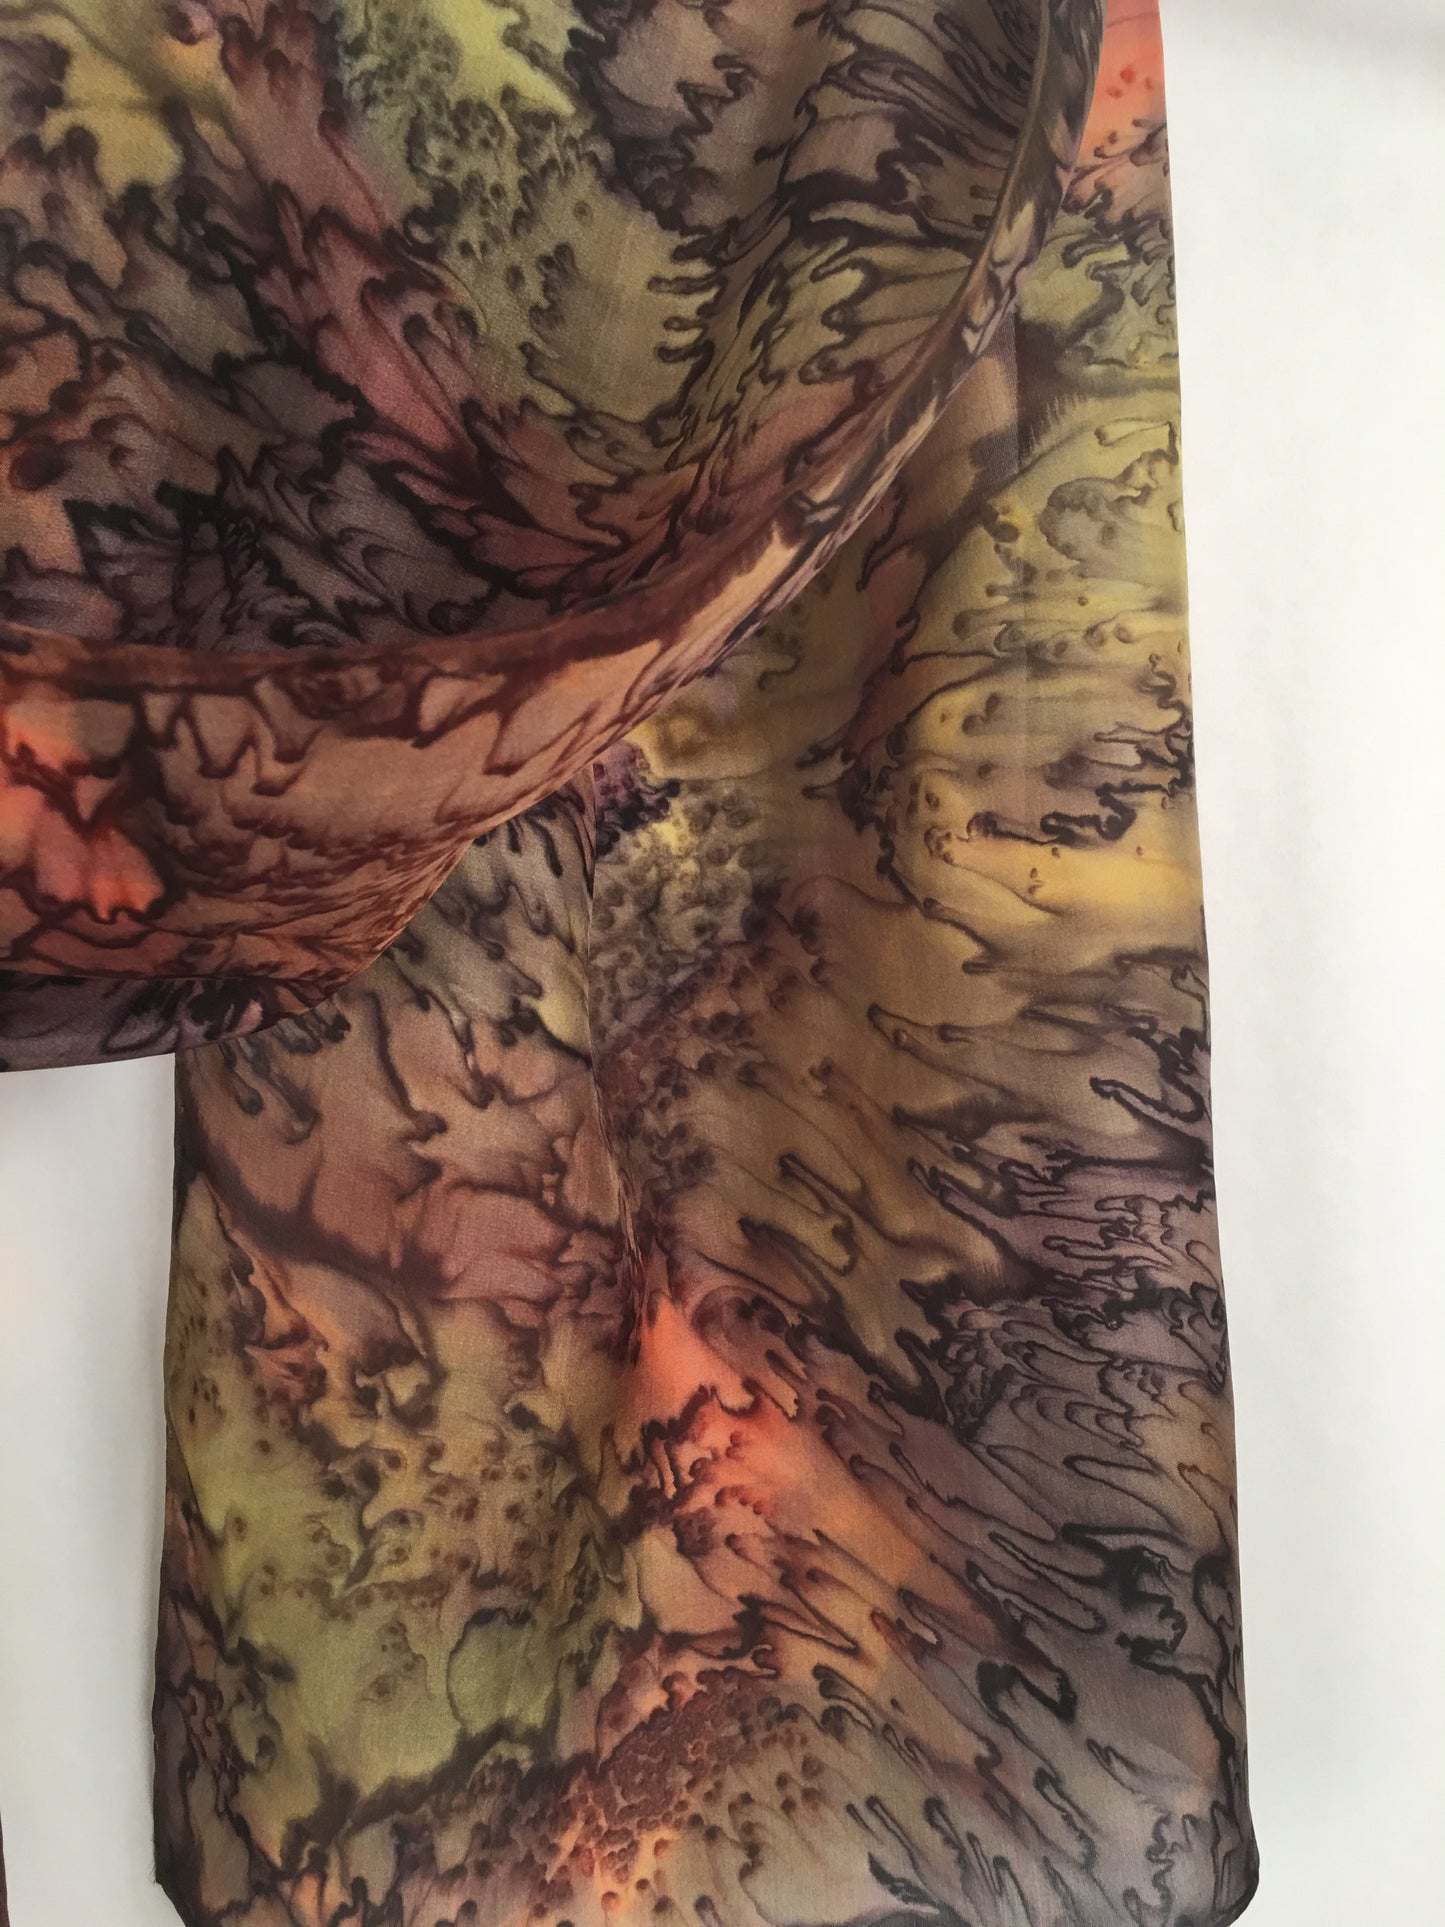 "Autumn Light" - Hand-dyed Silk Scarf - $115